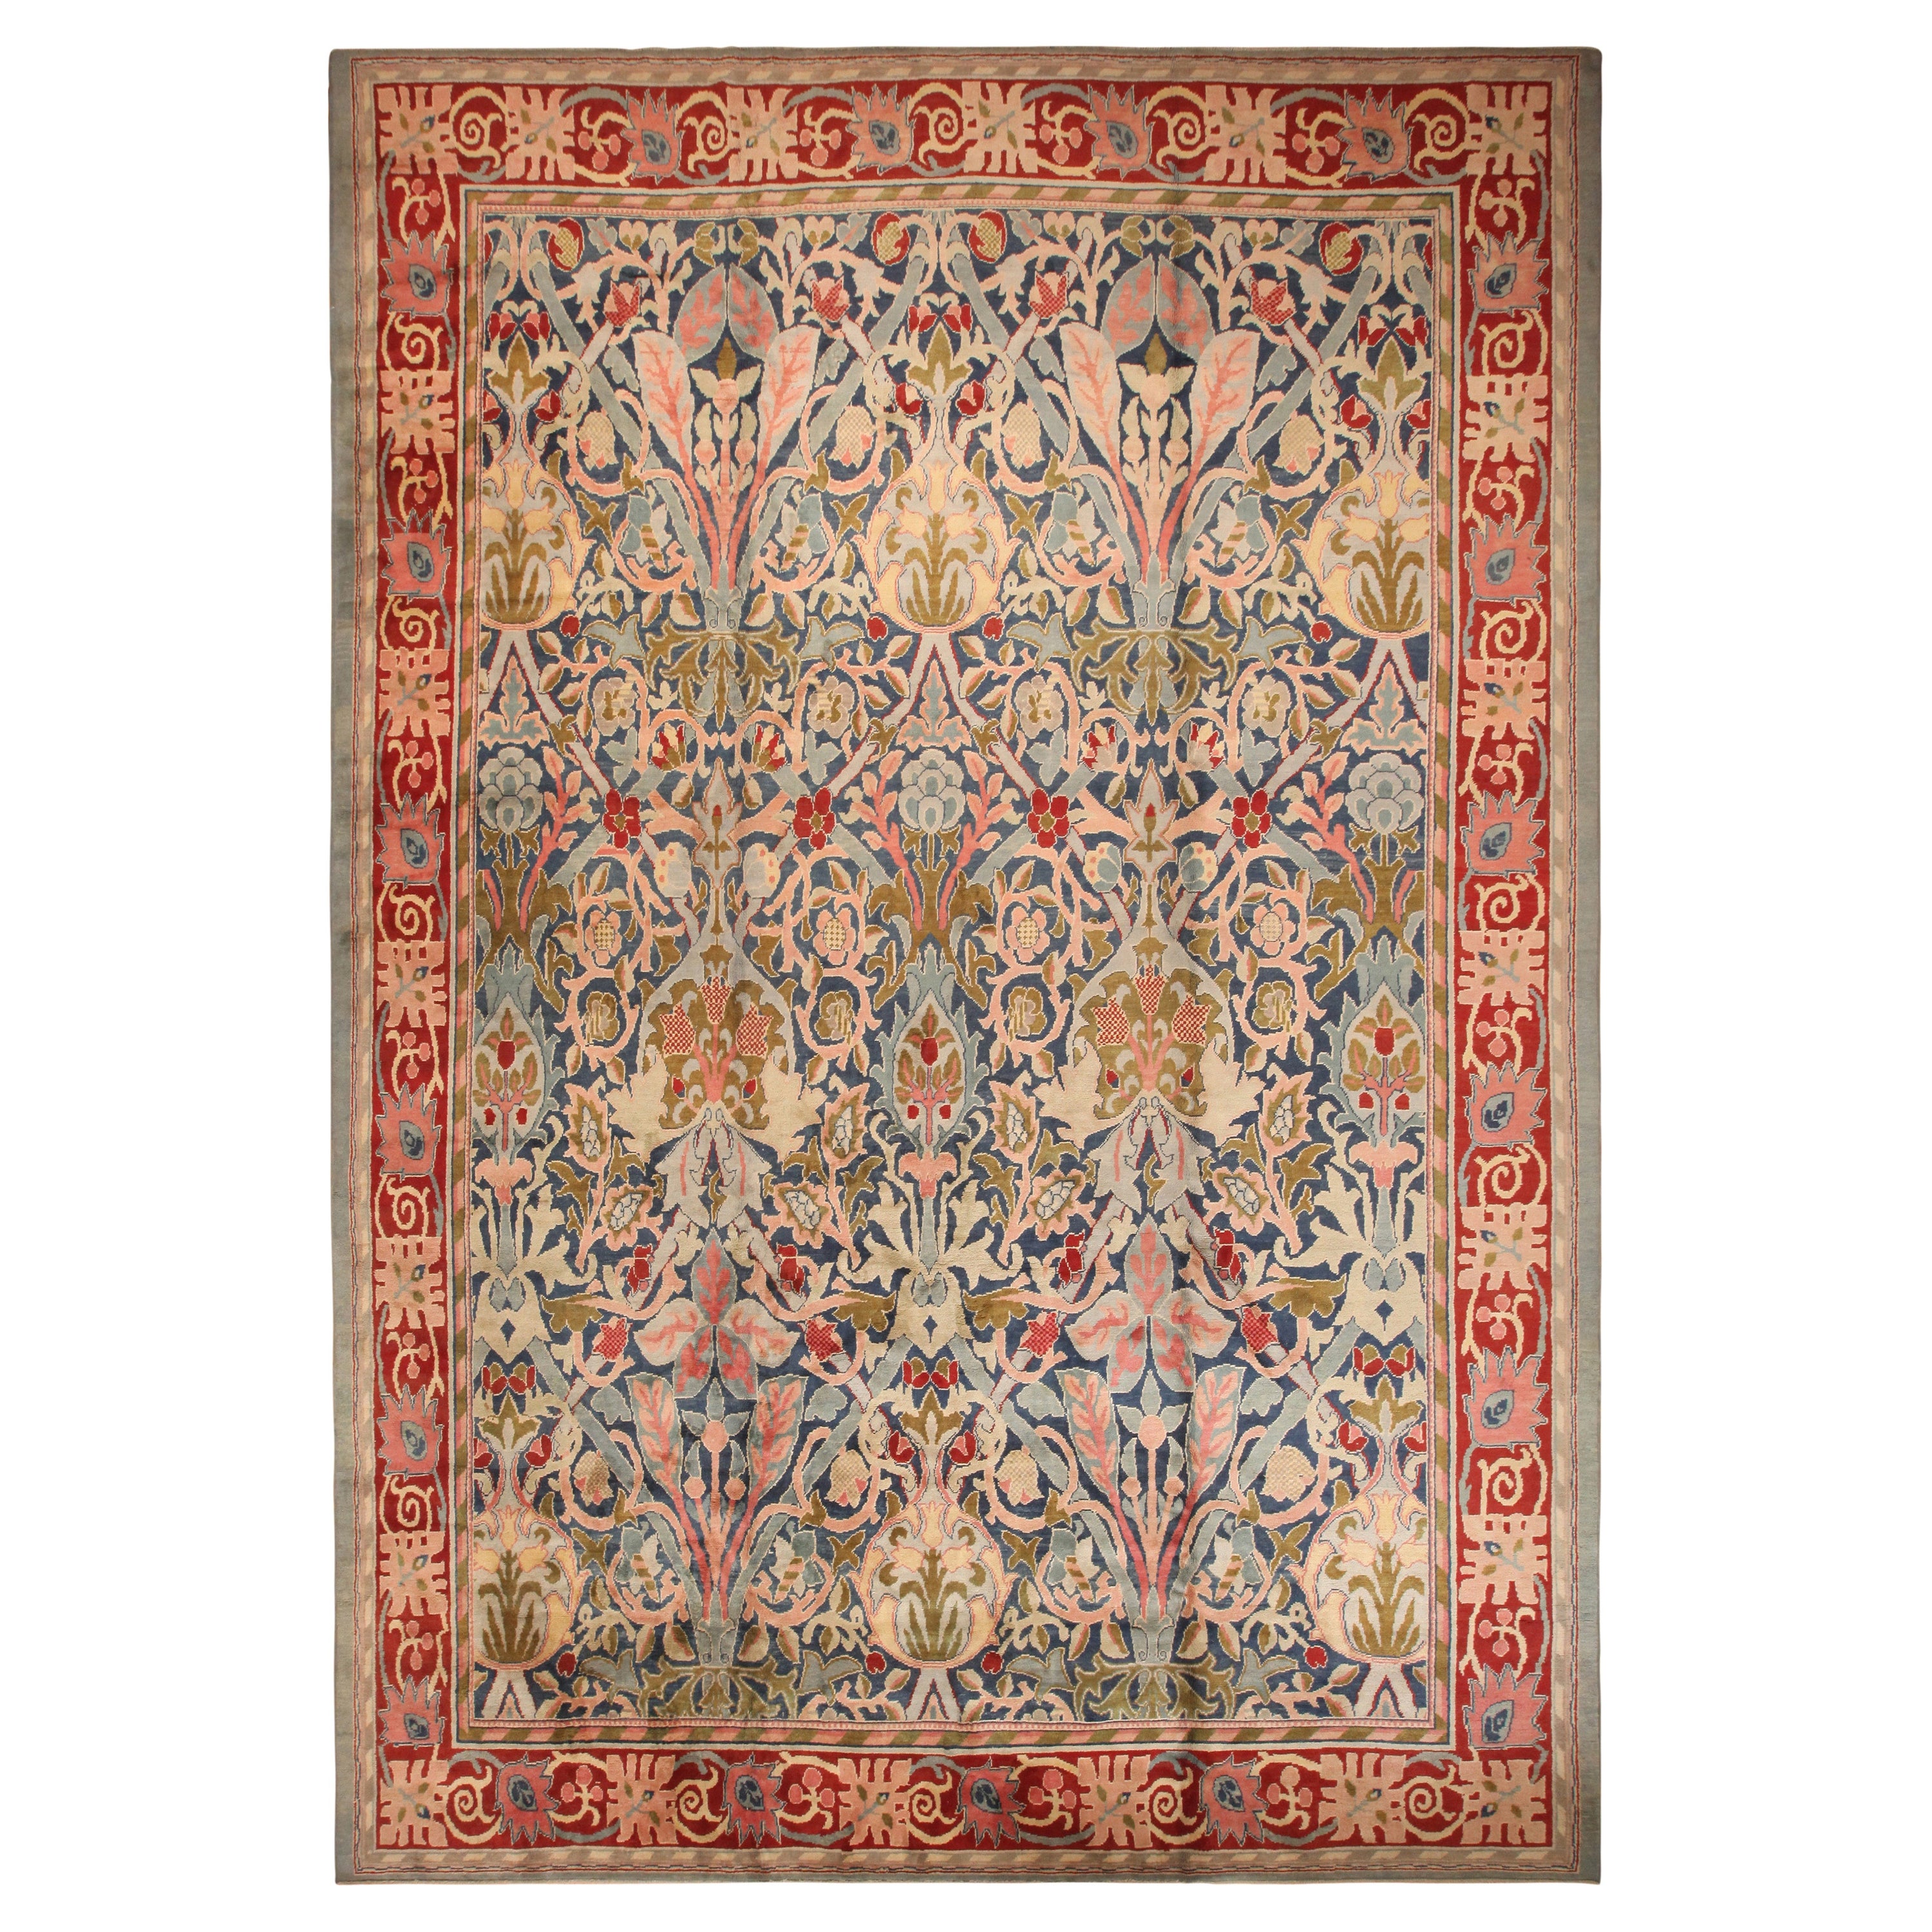 5' 9 x 8' 2 Traditional Persian Chobi Design Handmade Agra Rug Rosewood Wool ft 